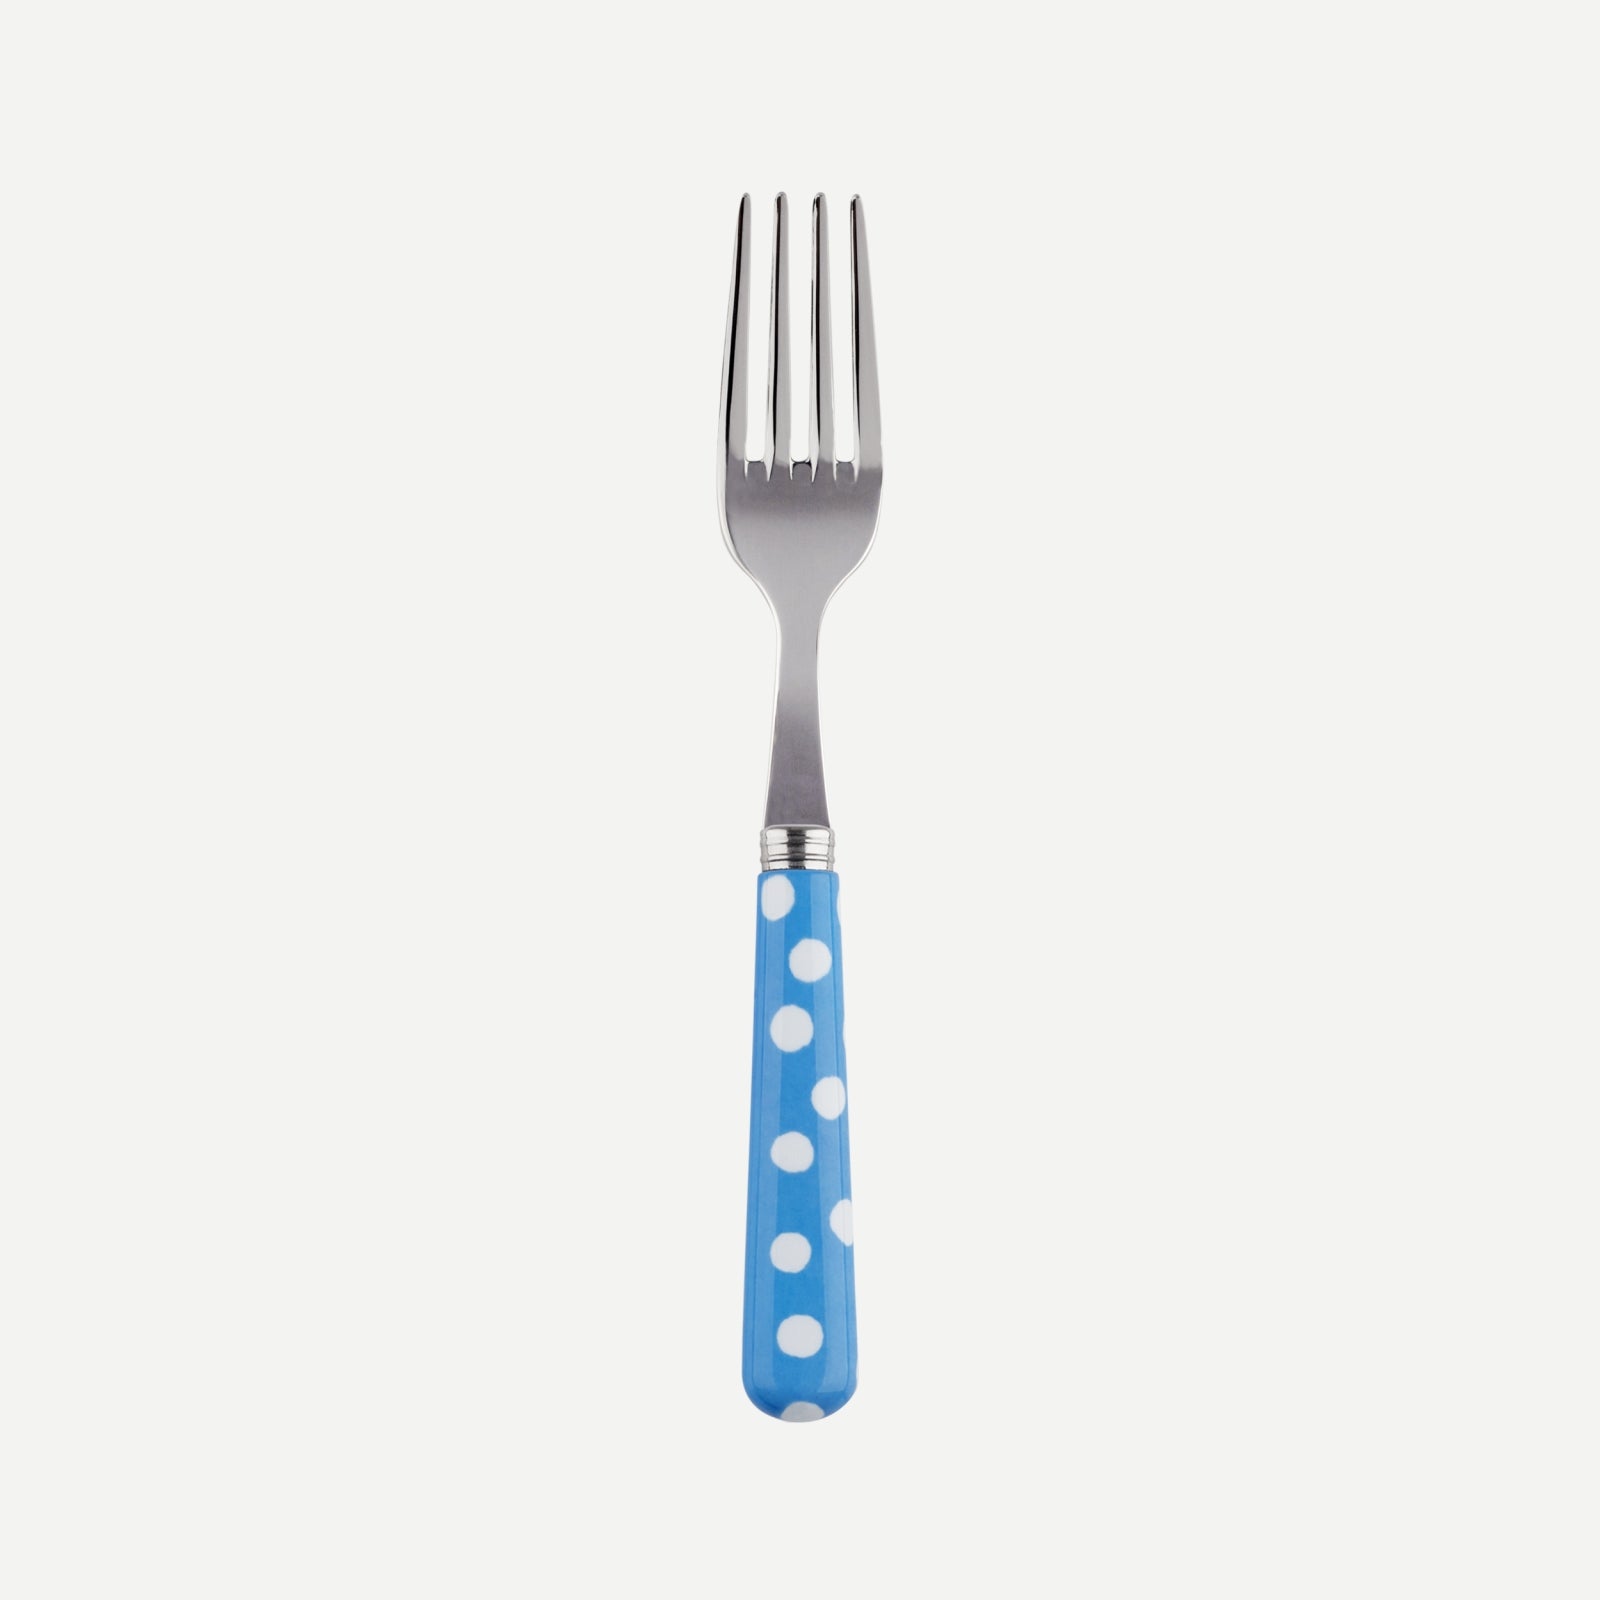 Petite fourchette - Pois Blancs - Bleu clair